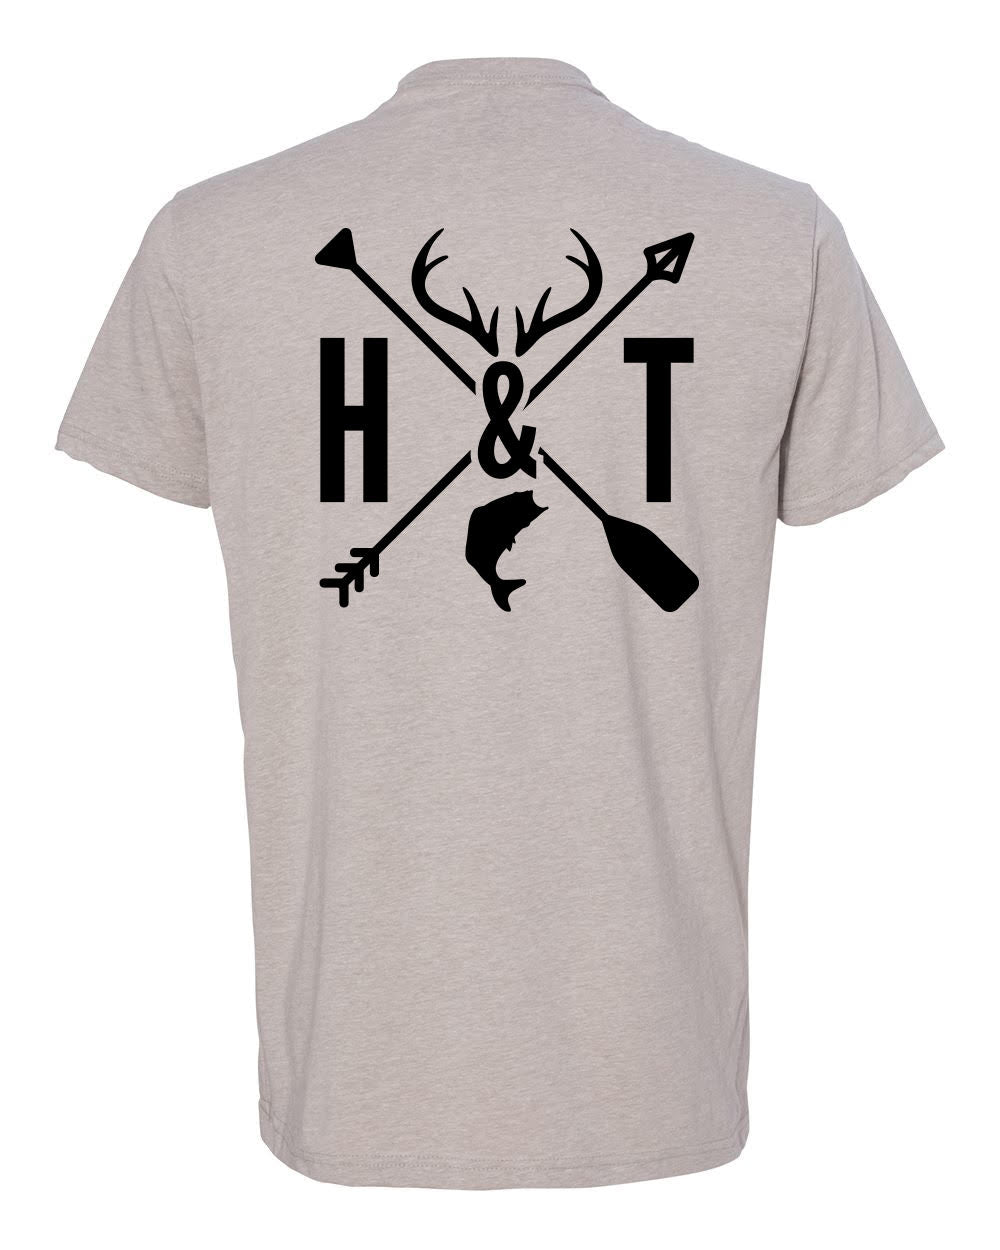 Hunting Graphic Tee, Hunting & Fishing Shirt, Deer Hunting Shirt